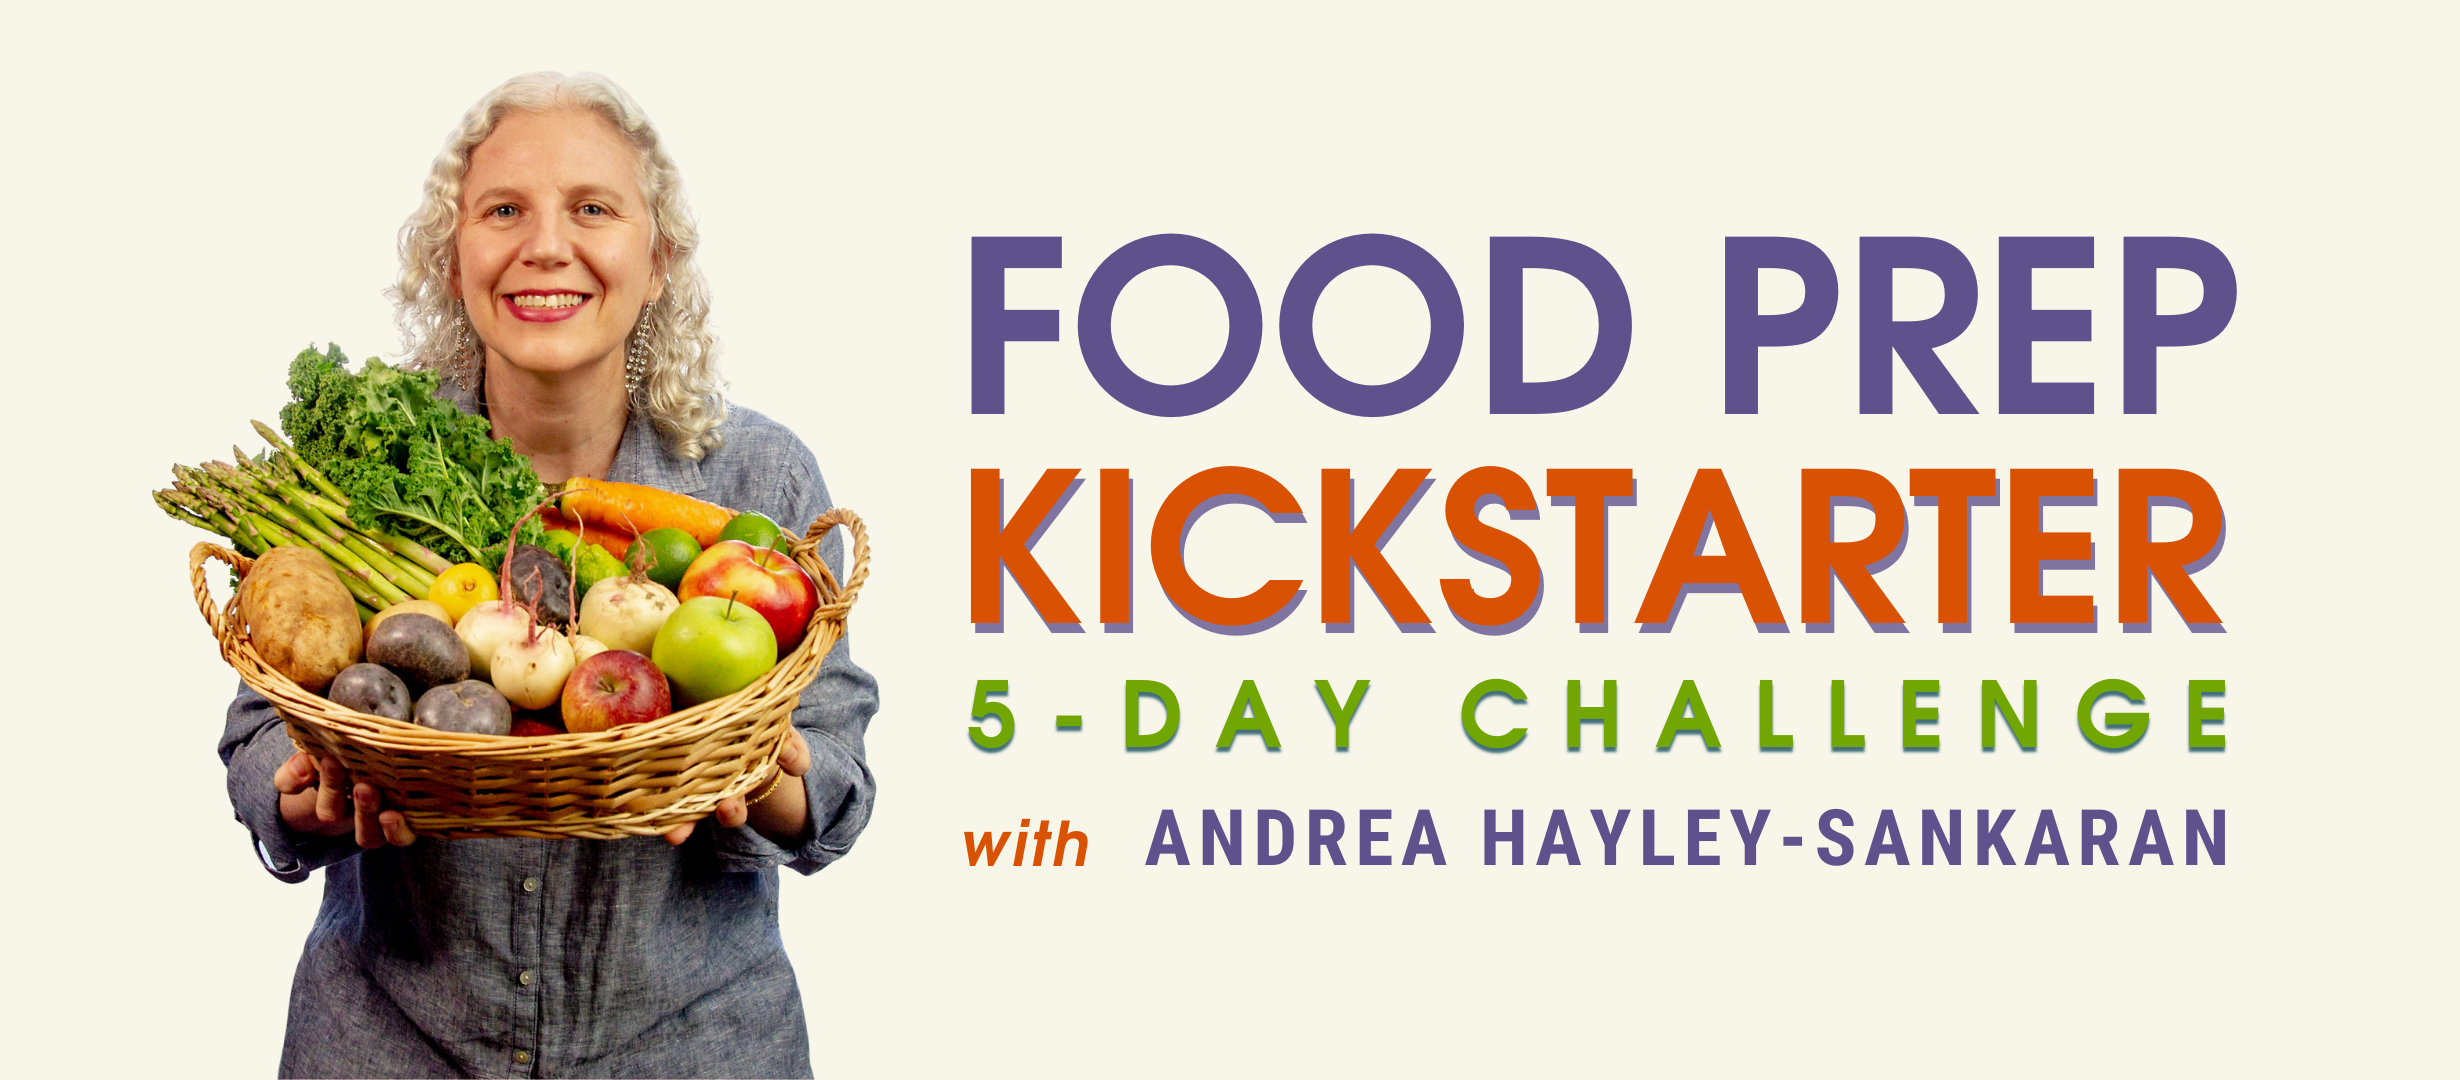 Food Prep kickstarter challenge heading